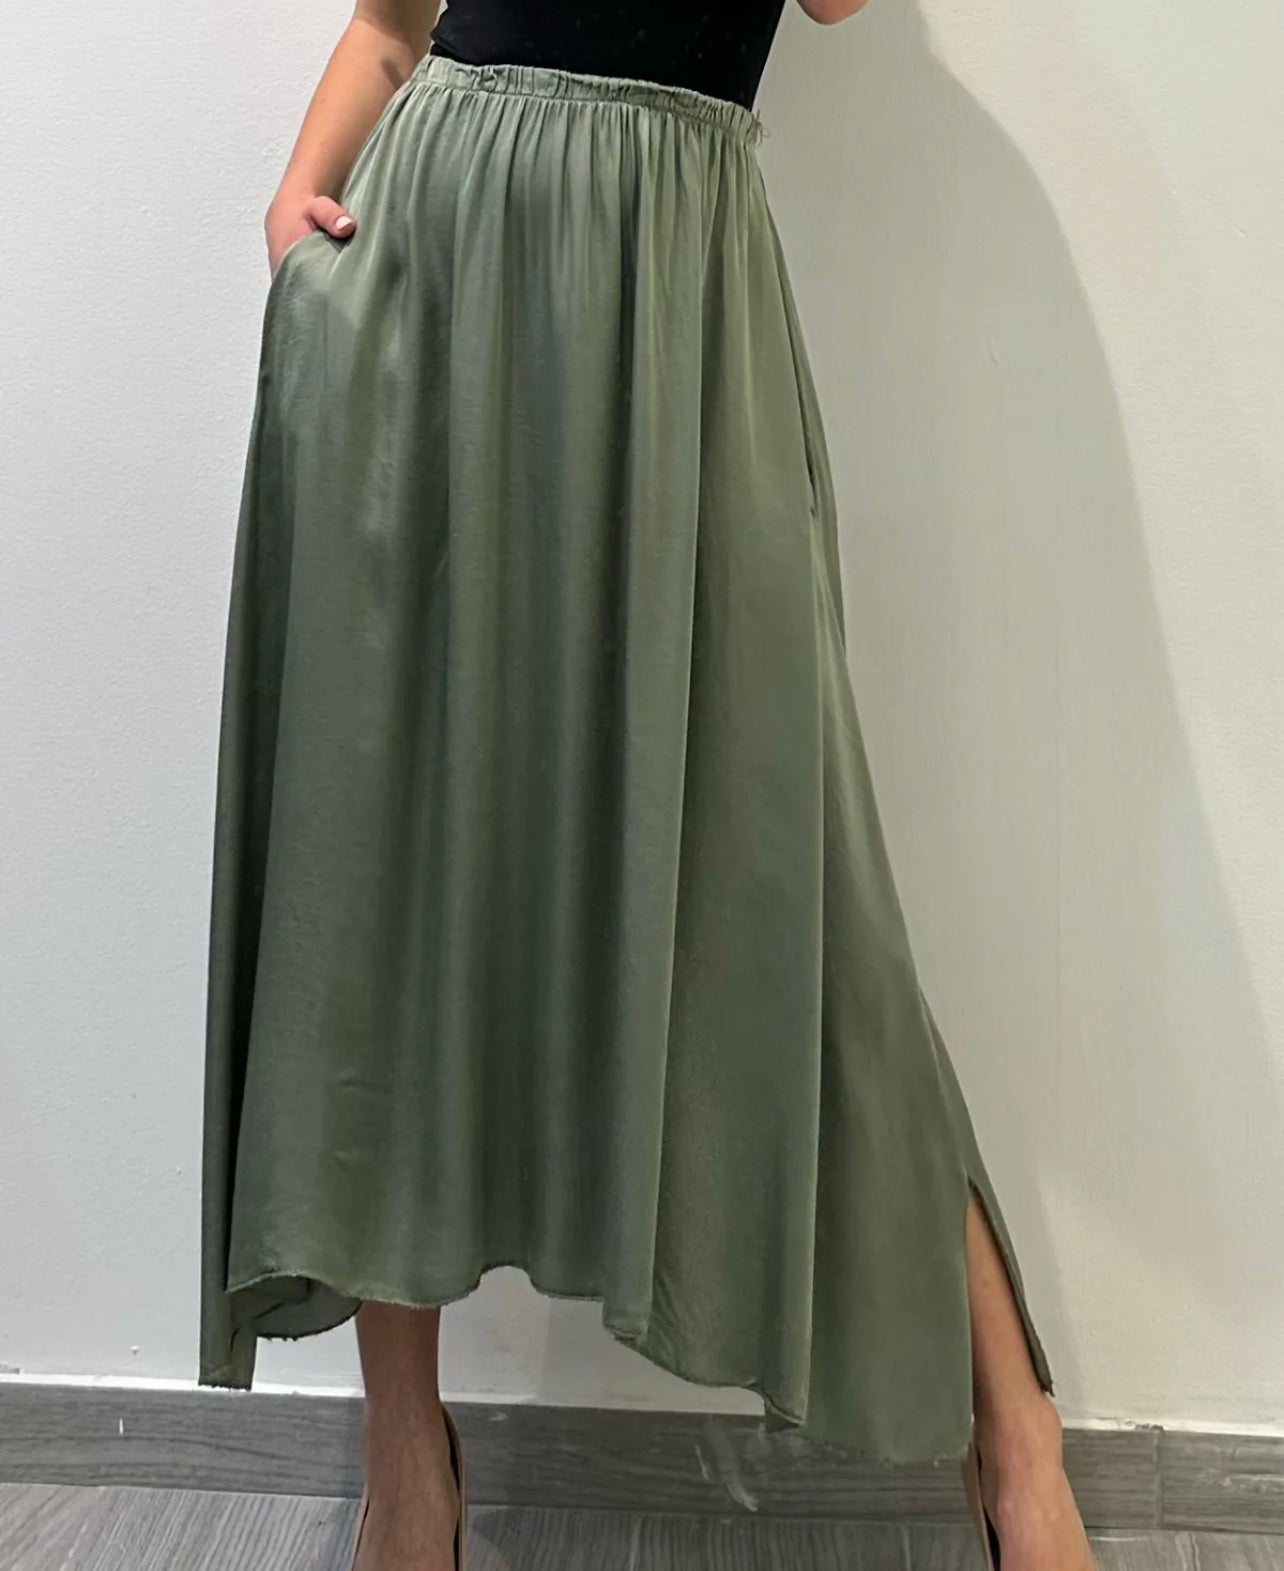 EL- 82445 Jupe / Skirt